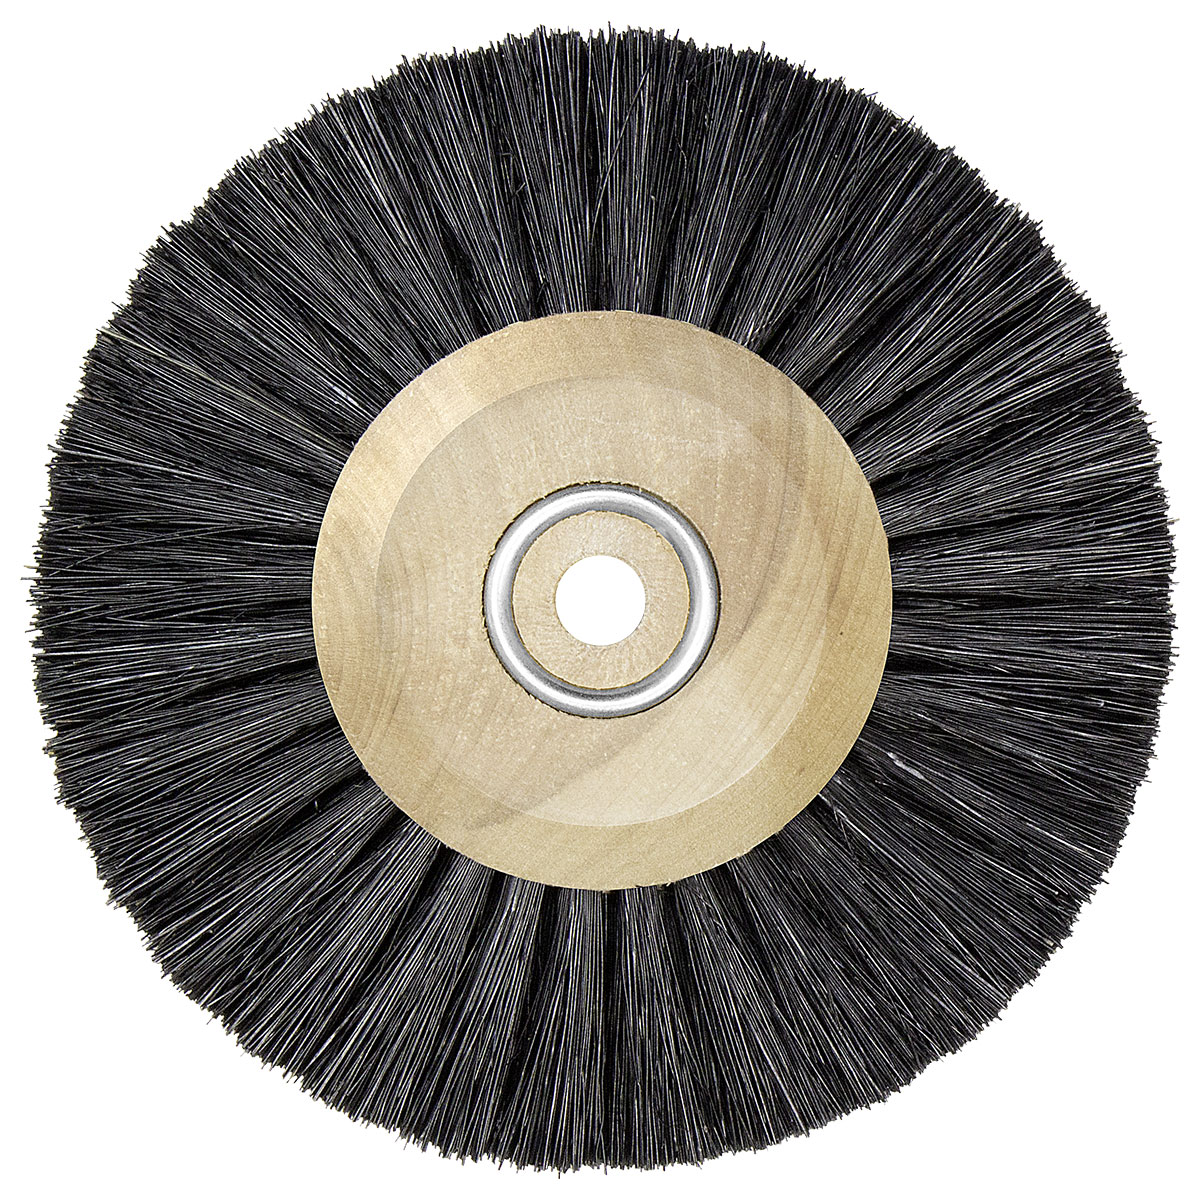 Wheel brush bristle 4 rows 100 mm